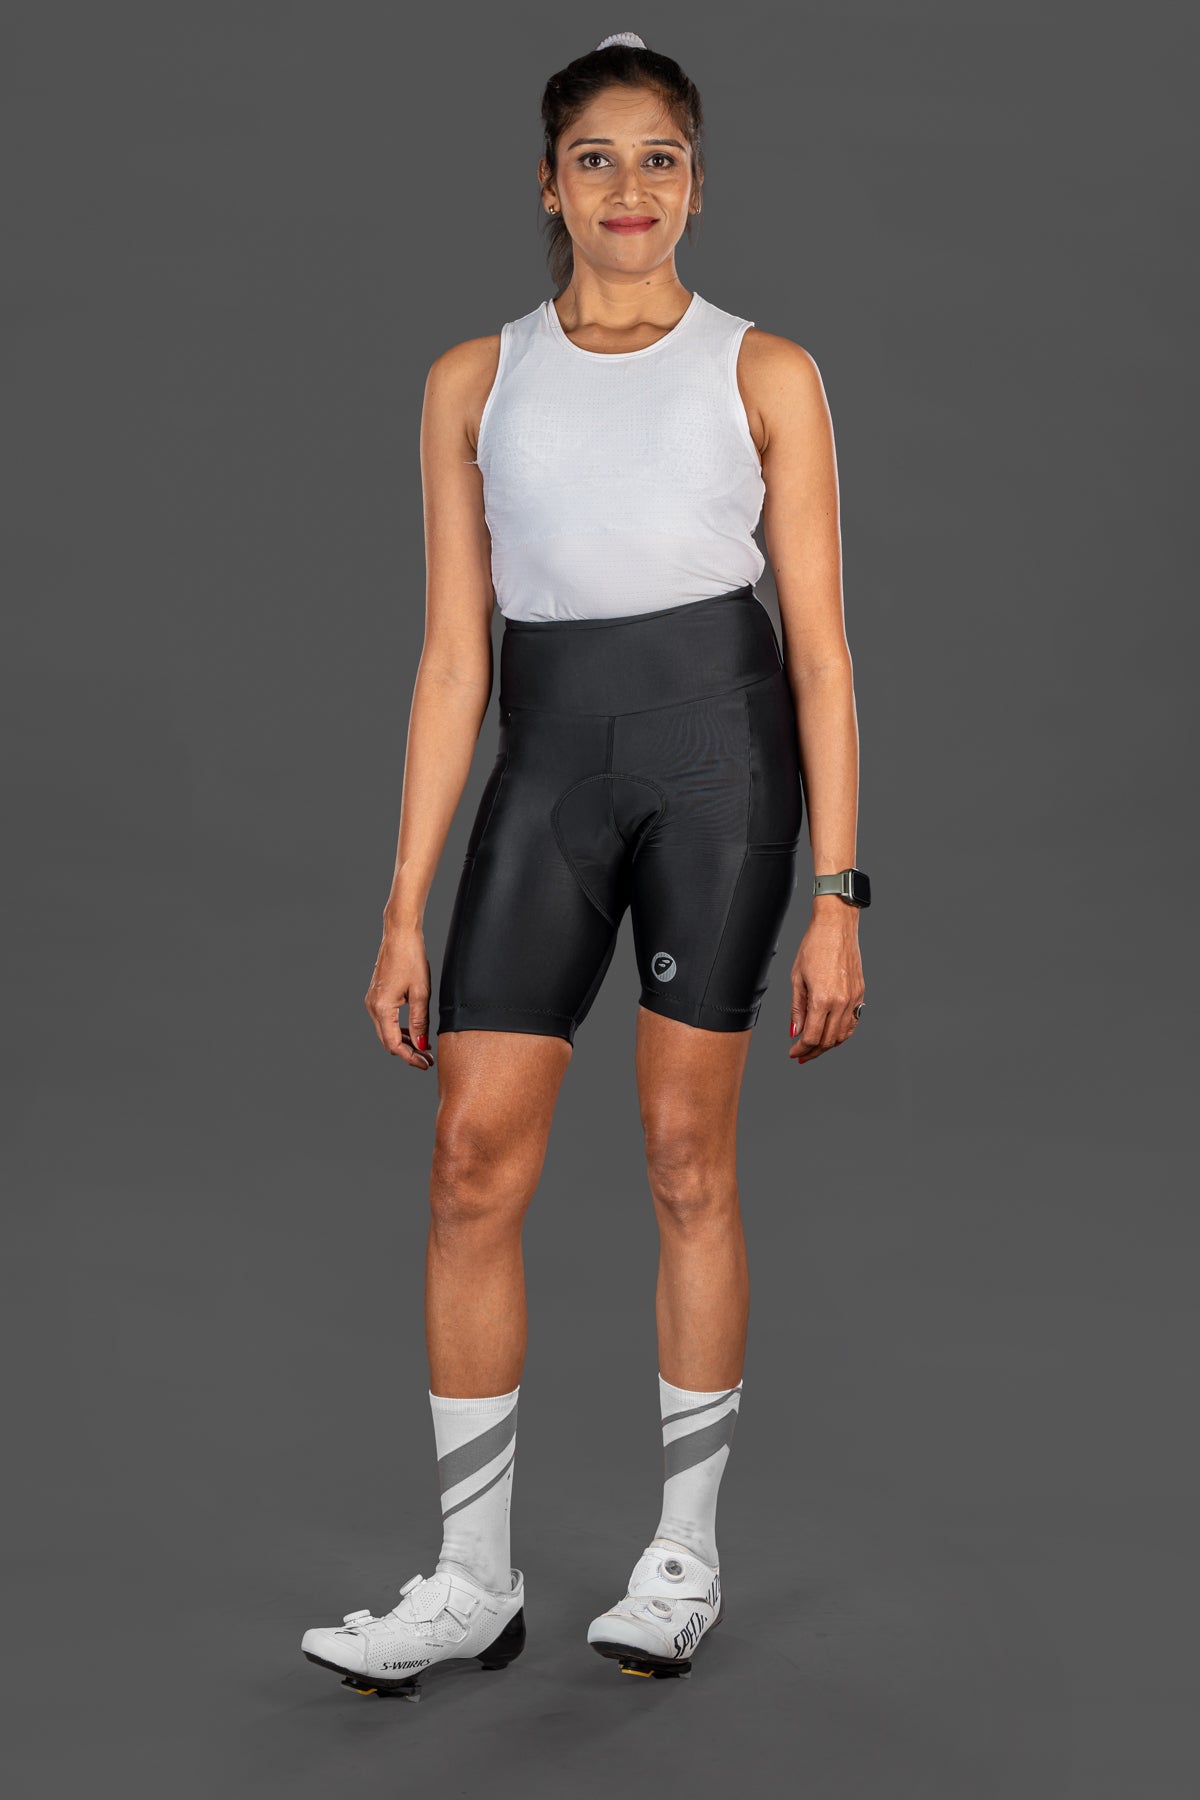 LASHALL Women's Gel Padded Cycling Underwear Bike Sports Gel Underpants  Quick-drying(Buy 2 Receive 3) 